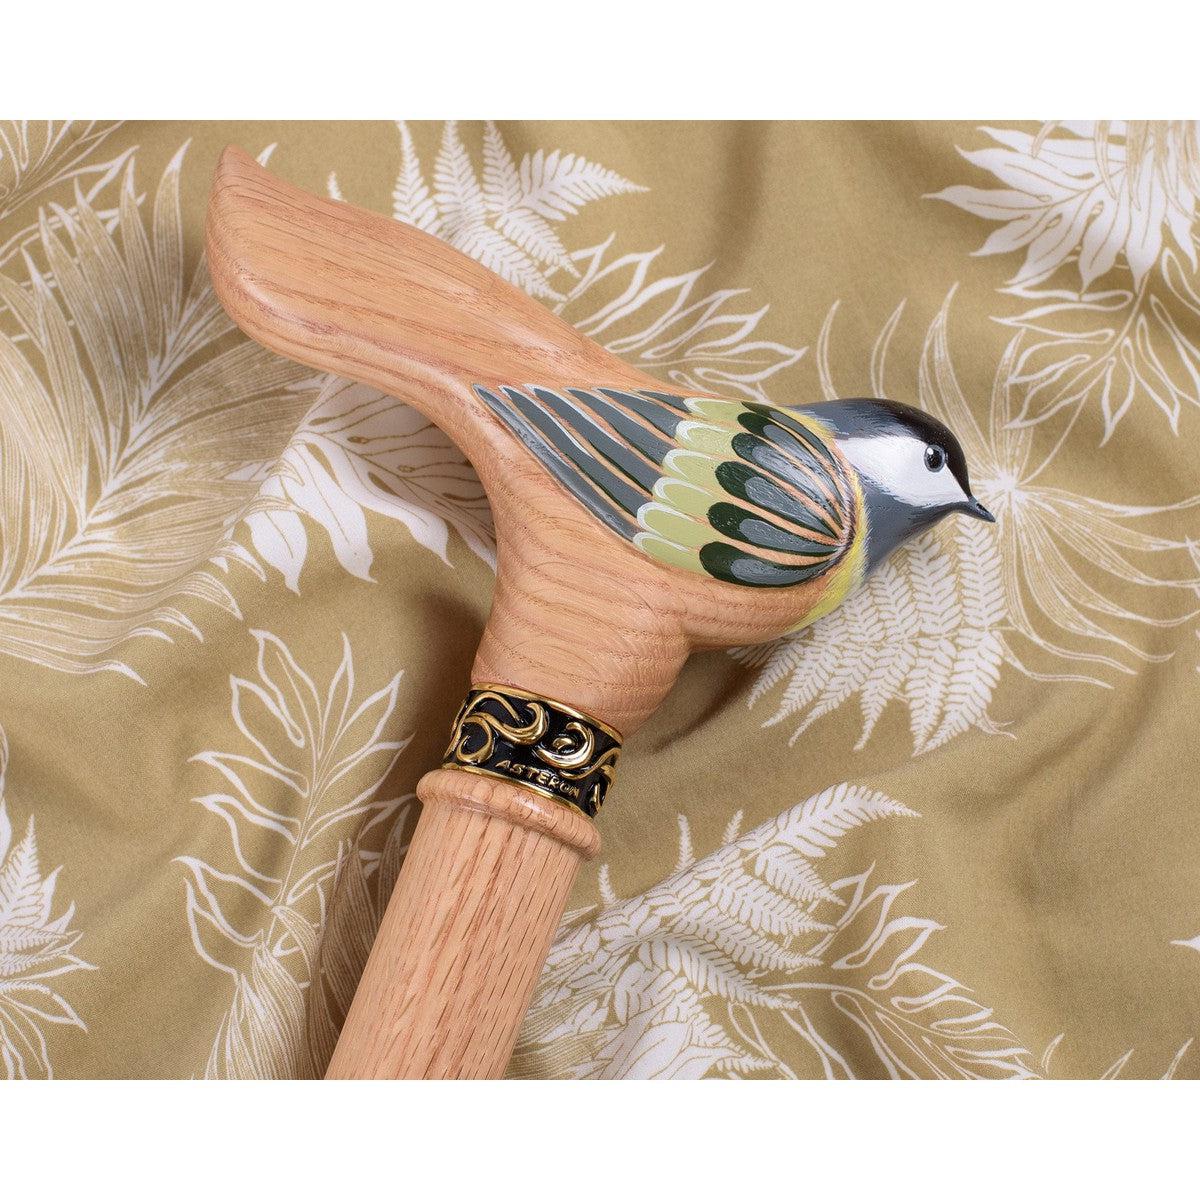 Stylish Handmade Walking Cane for Women - Birdie - Fashionable Women'S Cane - Fancy Walking Stick for Ladies